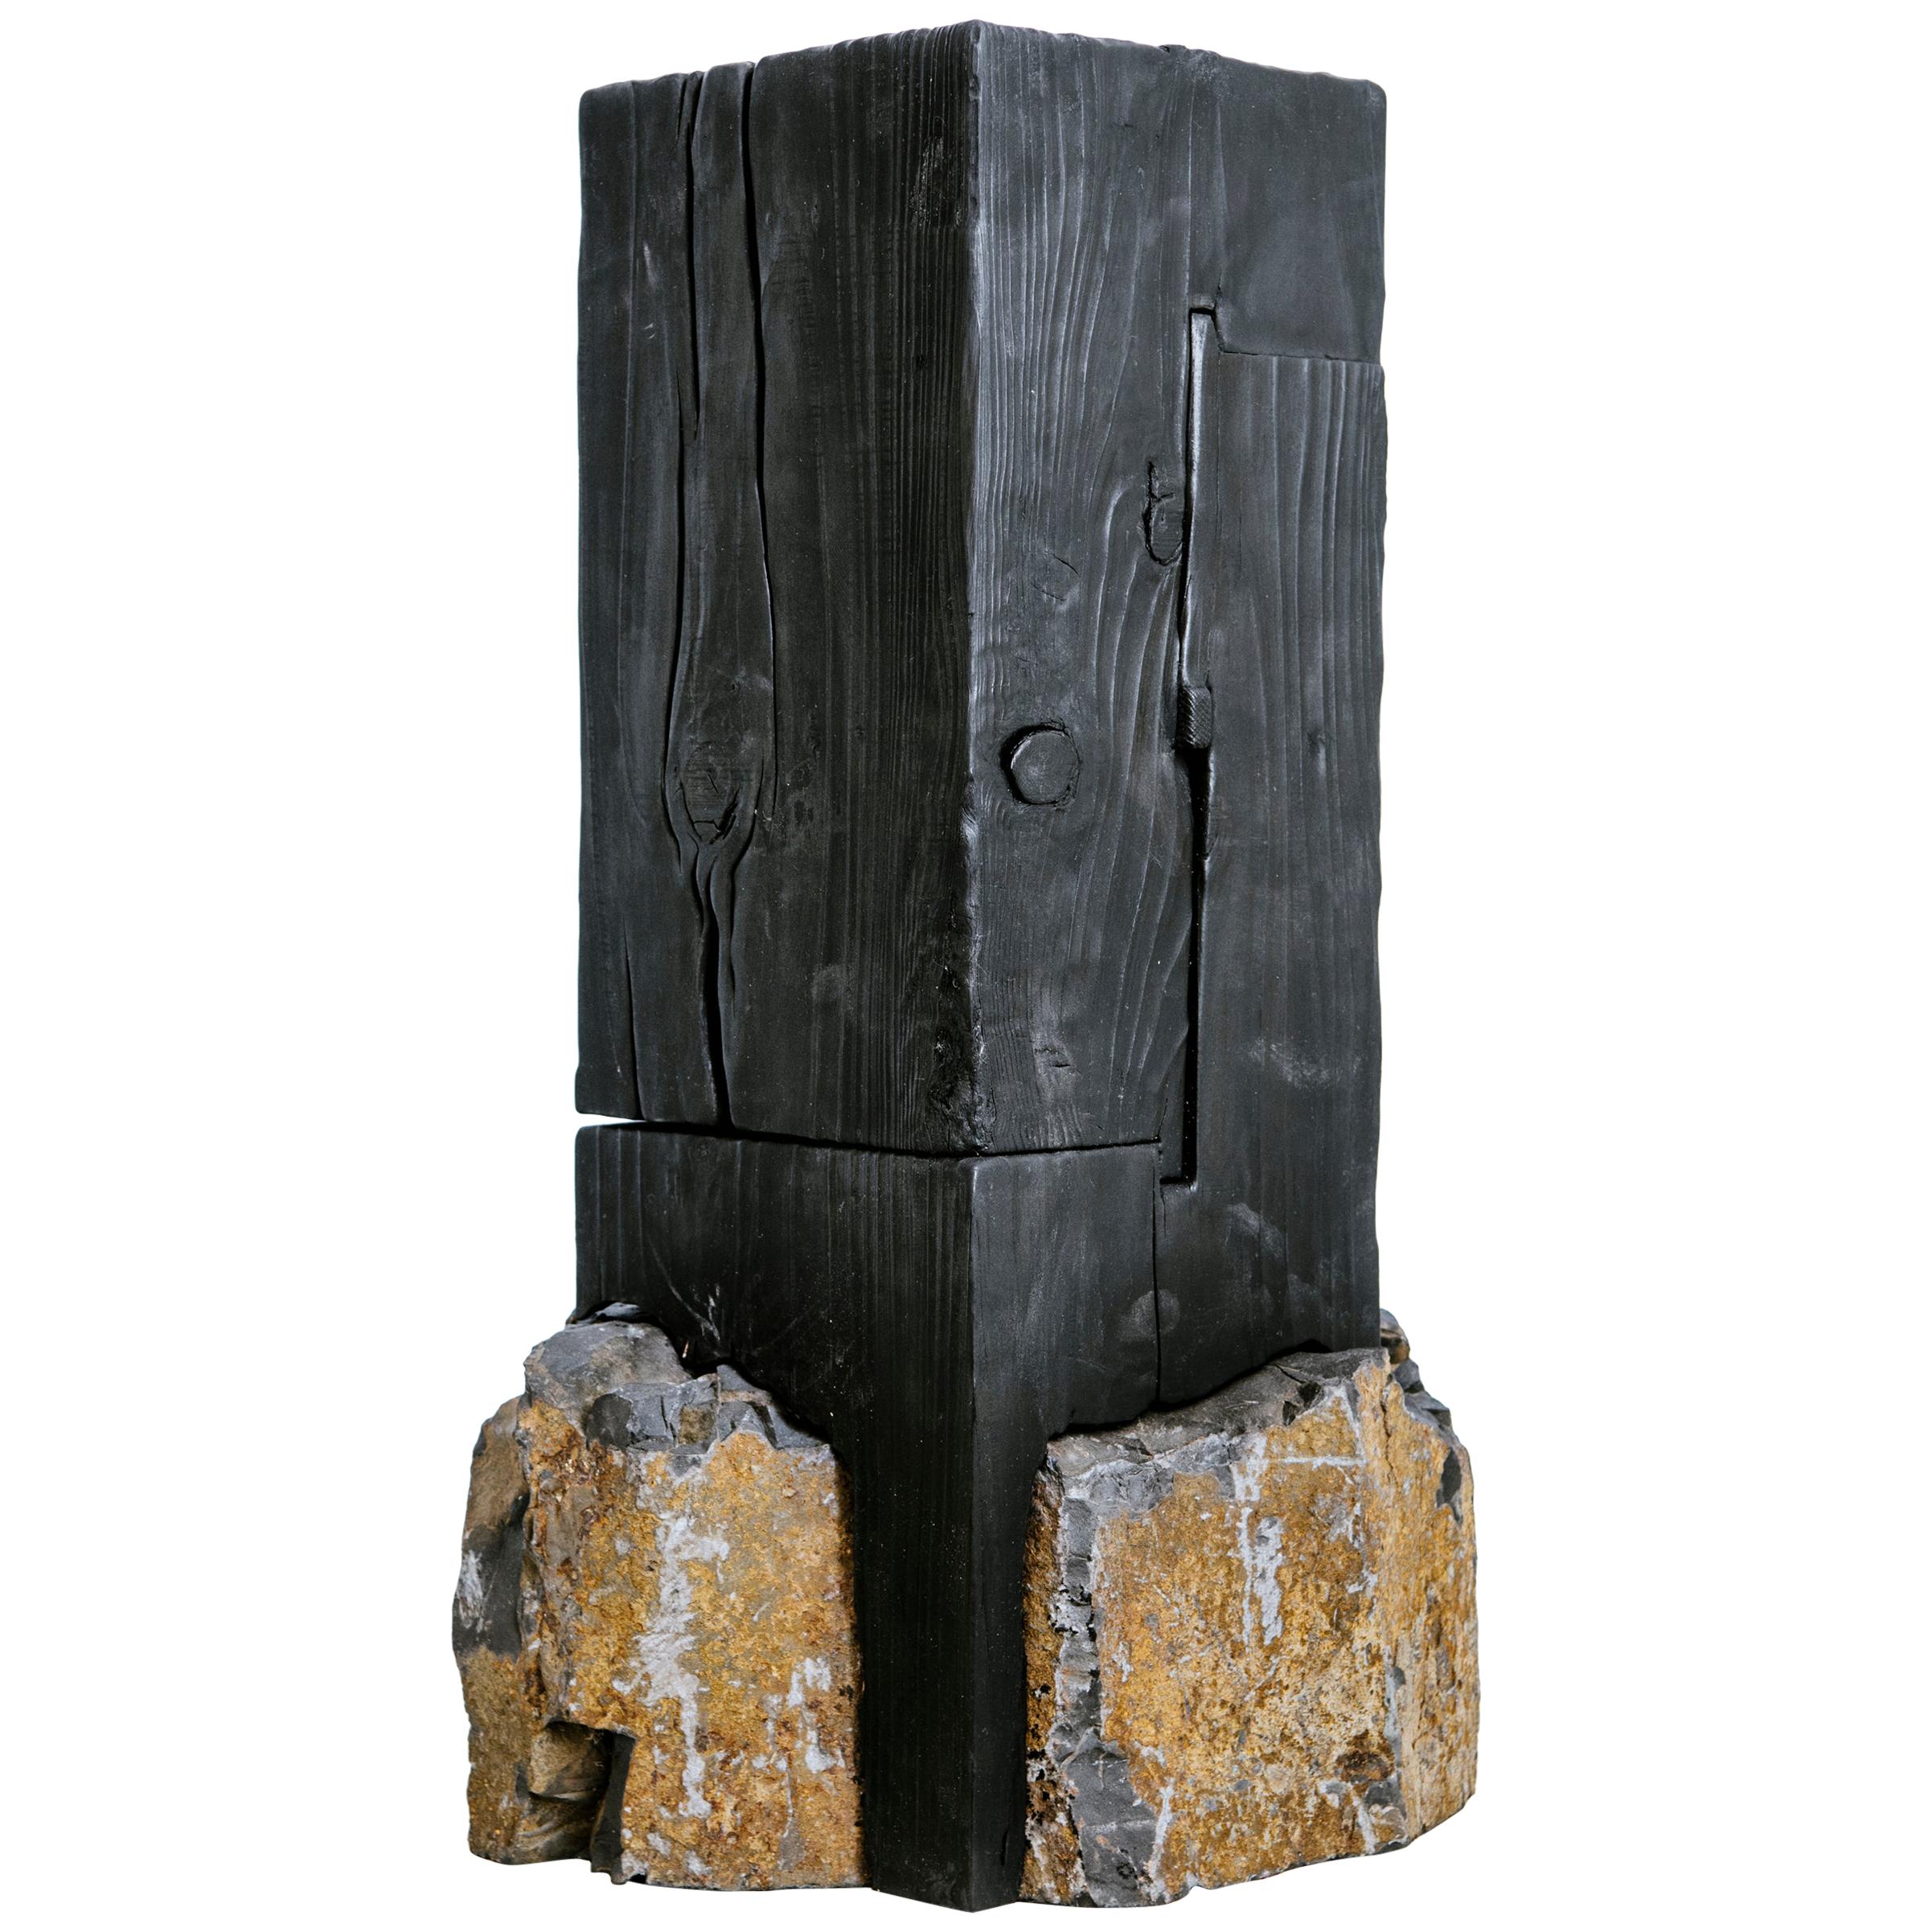 Unique Basalt and Blackened Redwood Pedestal Table by Base 10